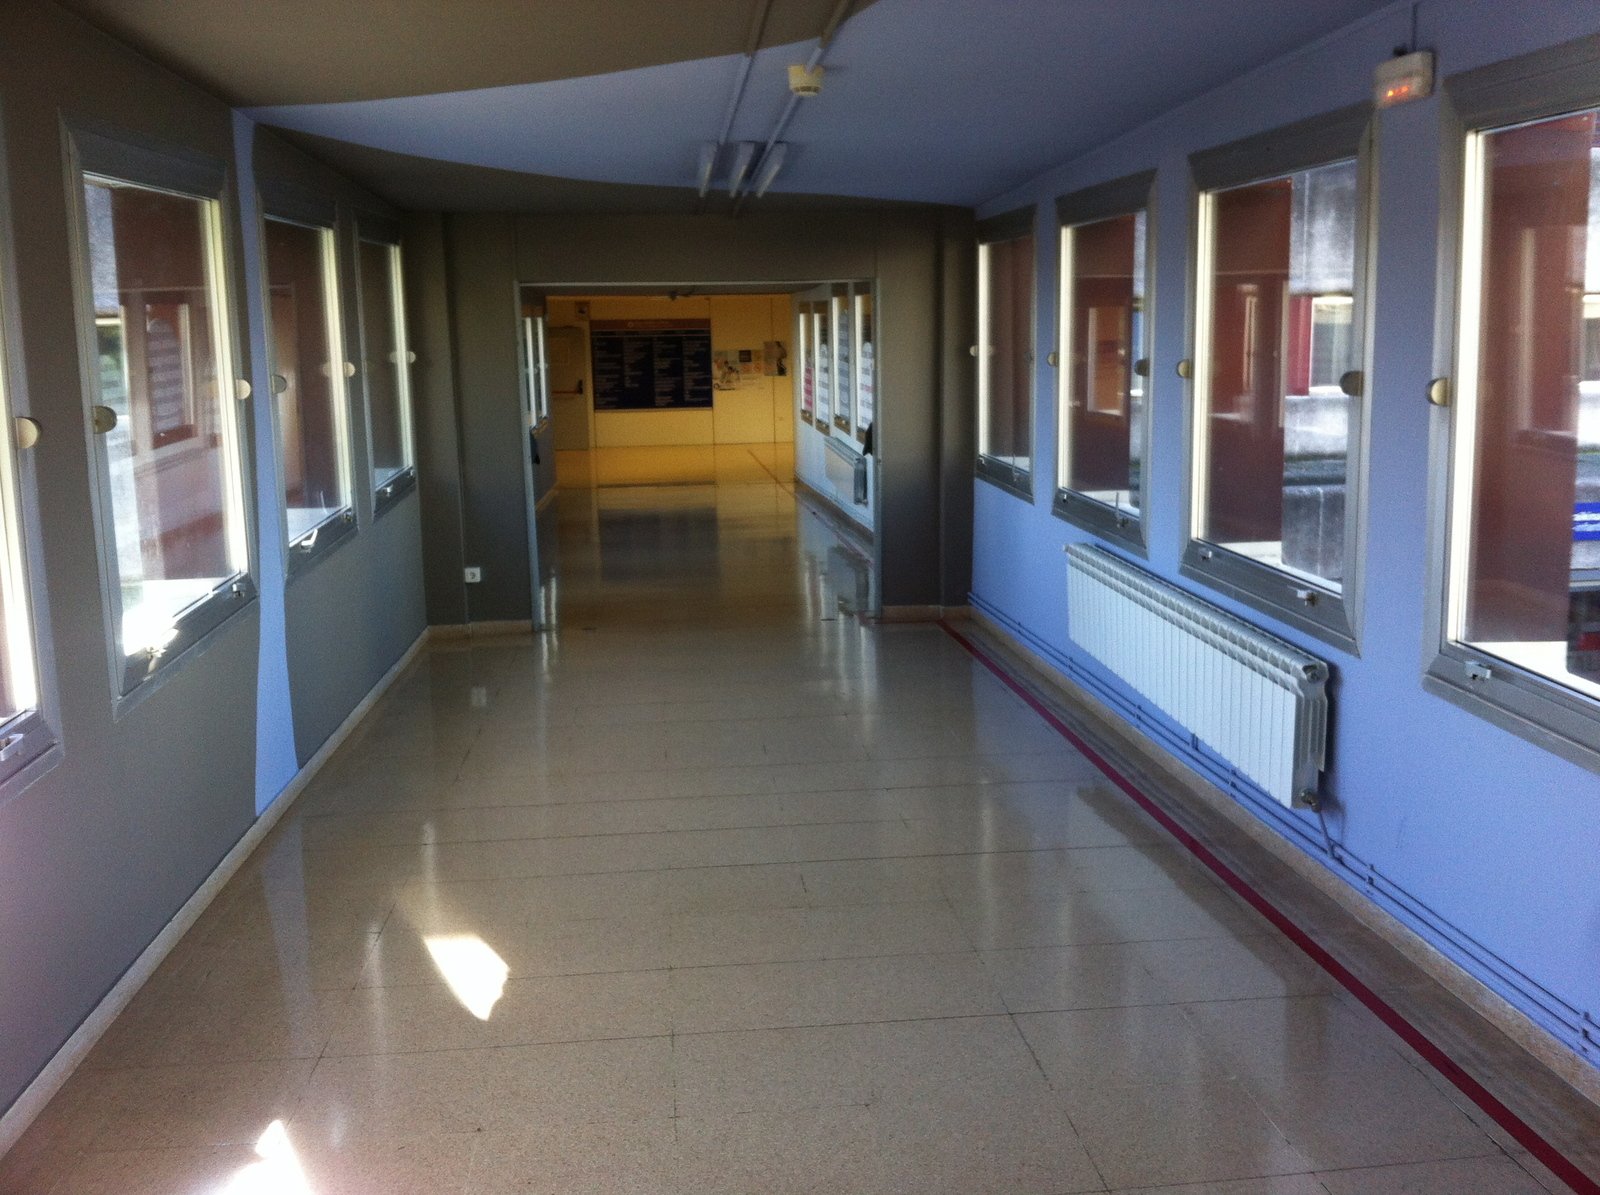 the sun shines through windows on an empty hallway